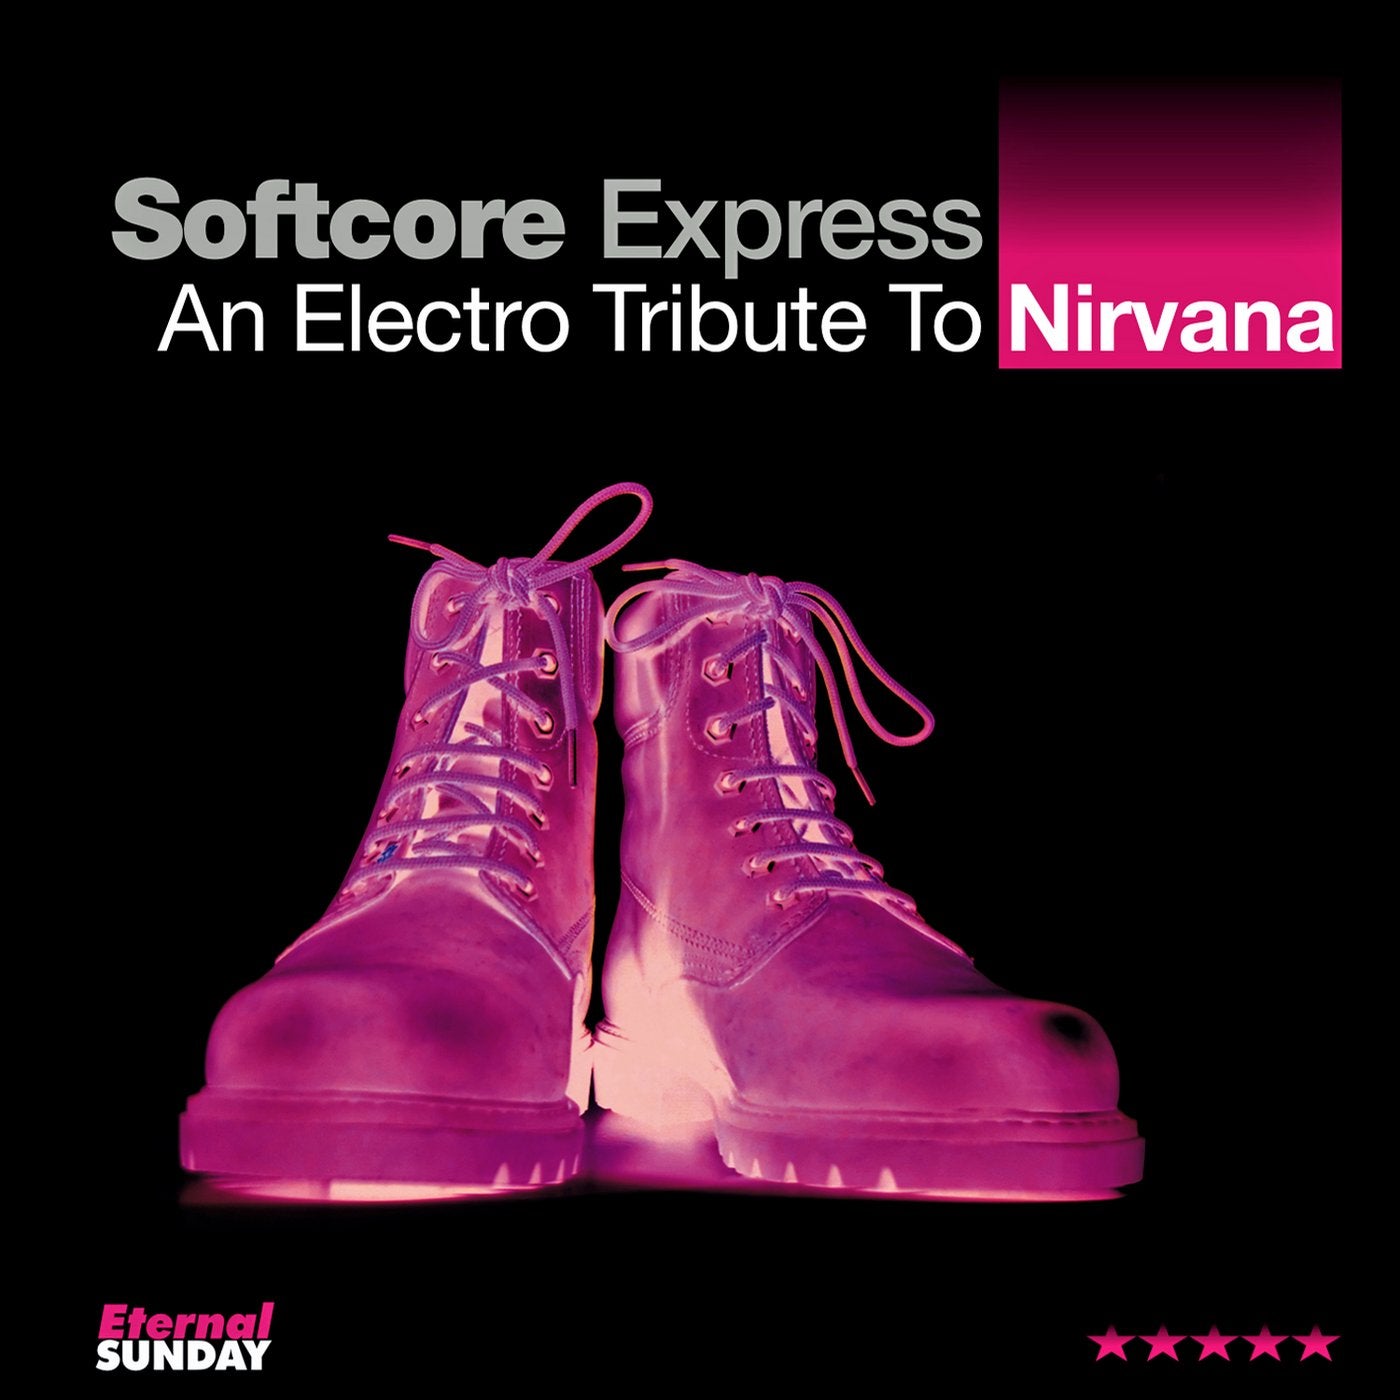 An Electro Tribute to Nirvana